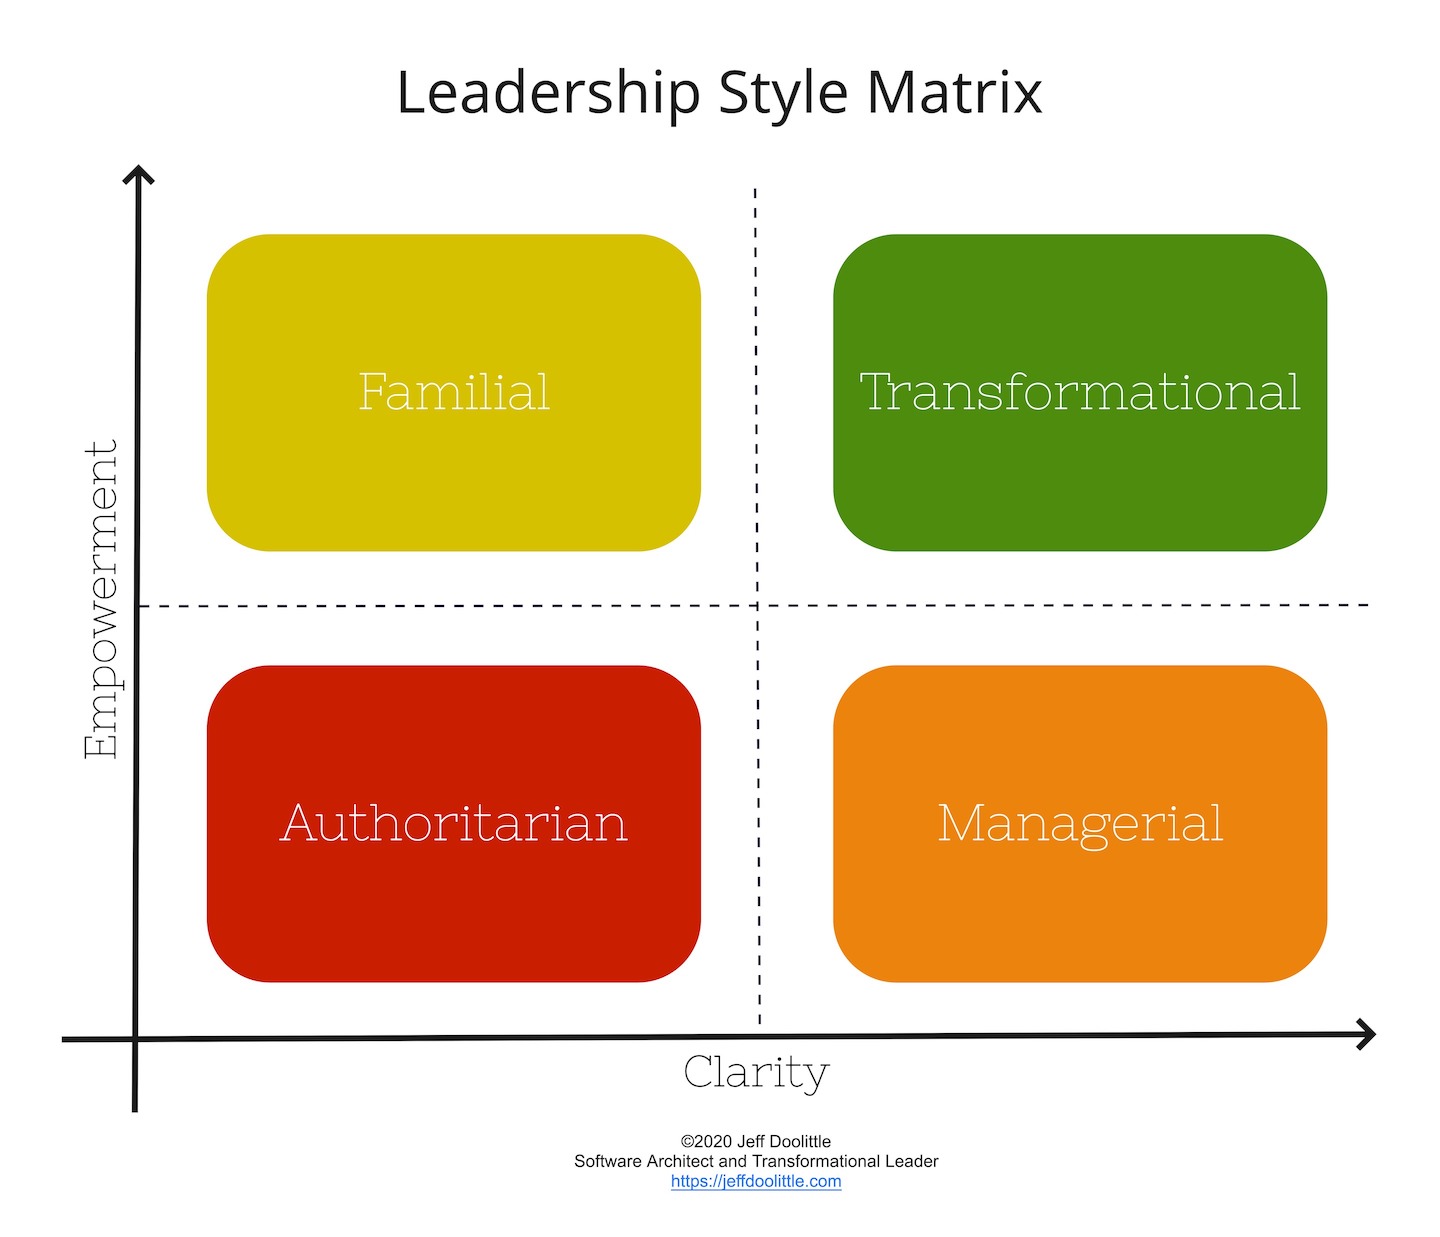 The Leadership Style Matrix